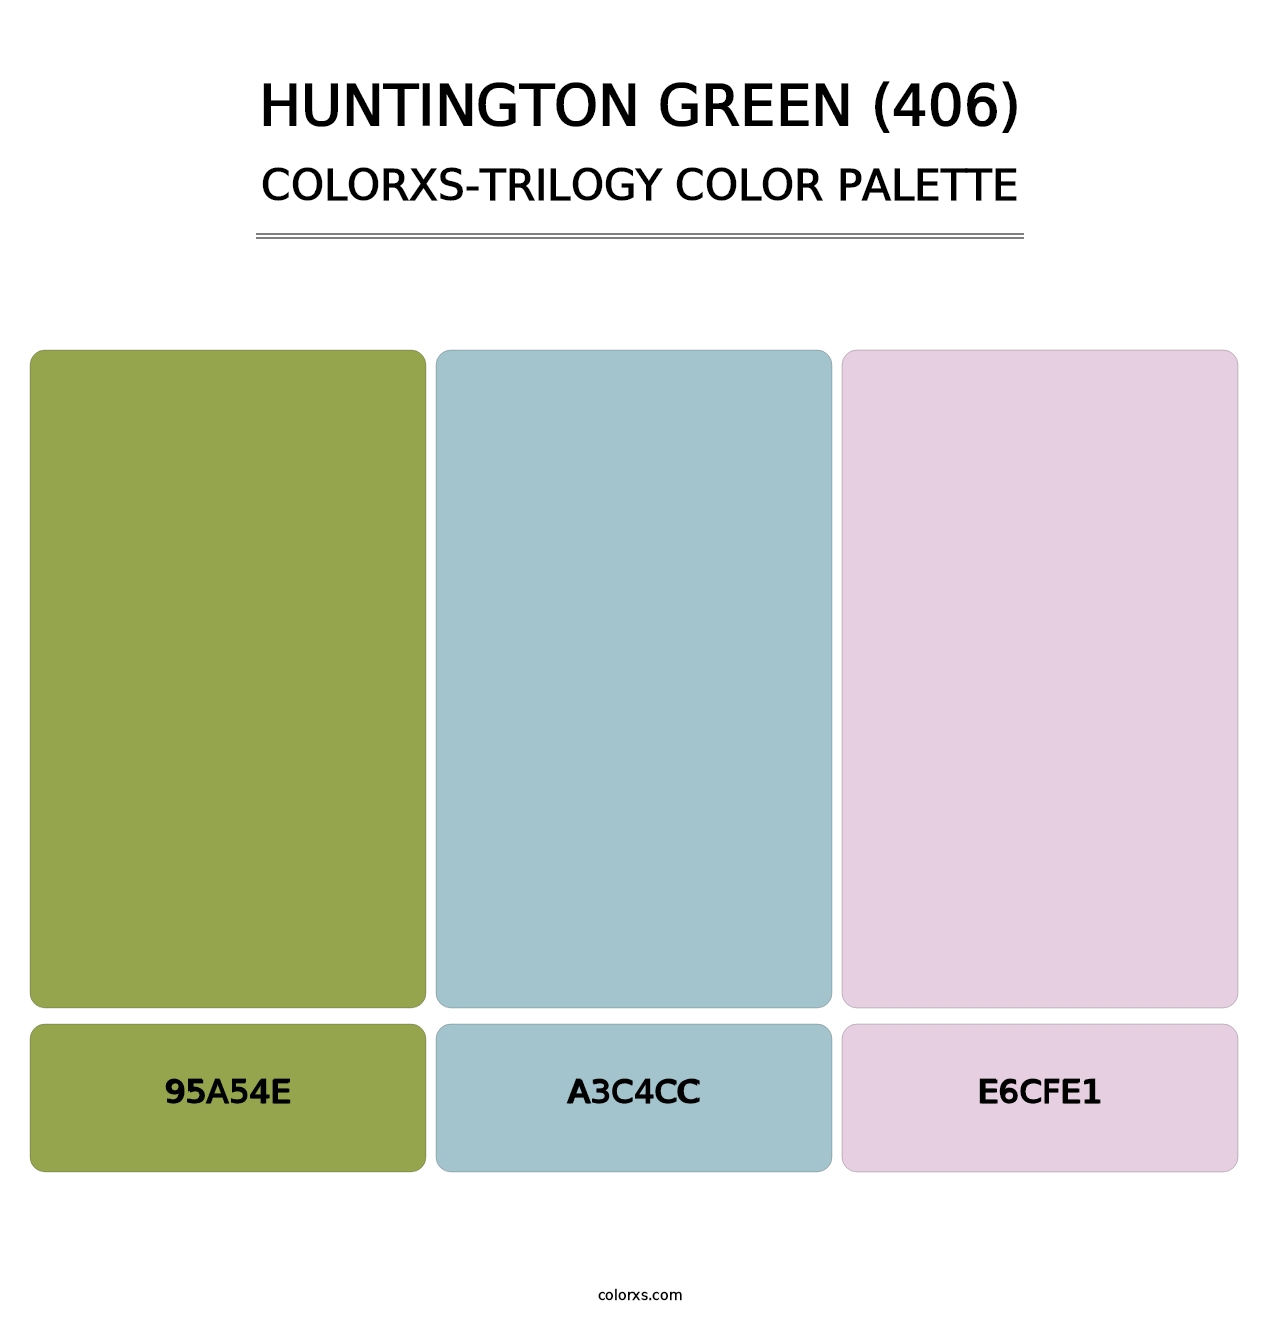 Huntington Green (406) - Colorxs Trilogy Palette